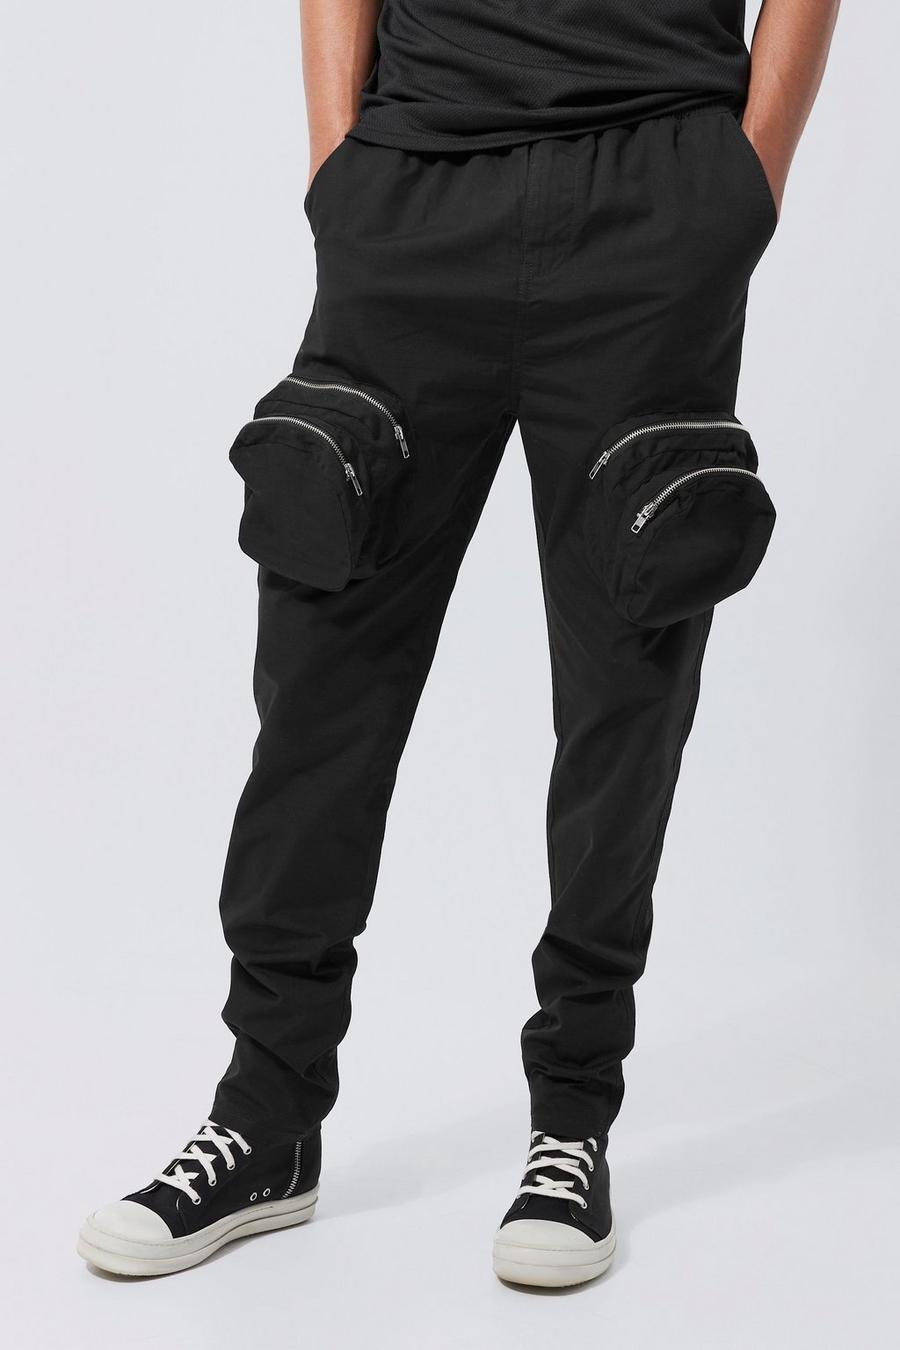 Pantalón Tall cargo ajustado elegante con cremallera 3D, Black image number 1